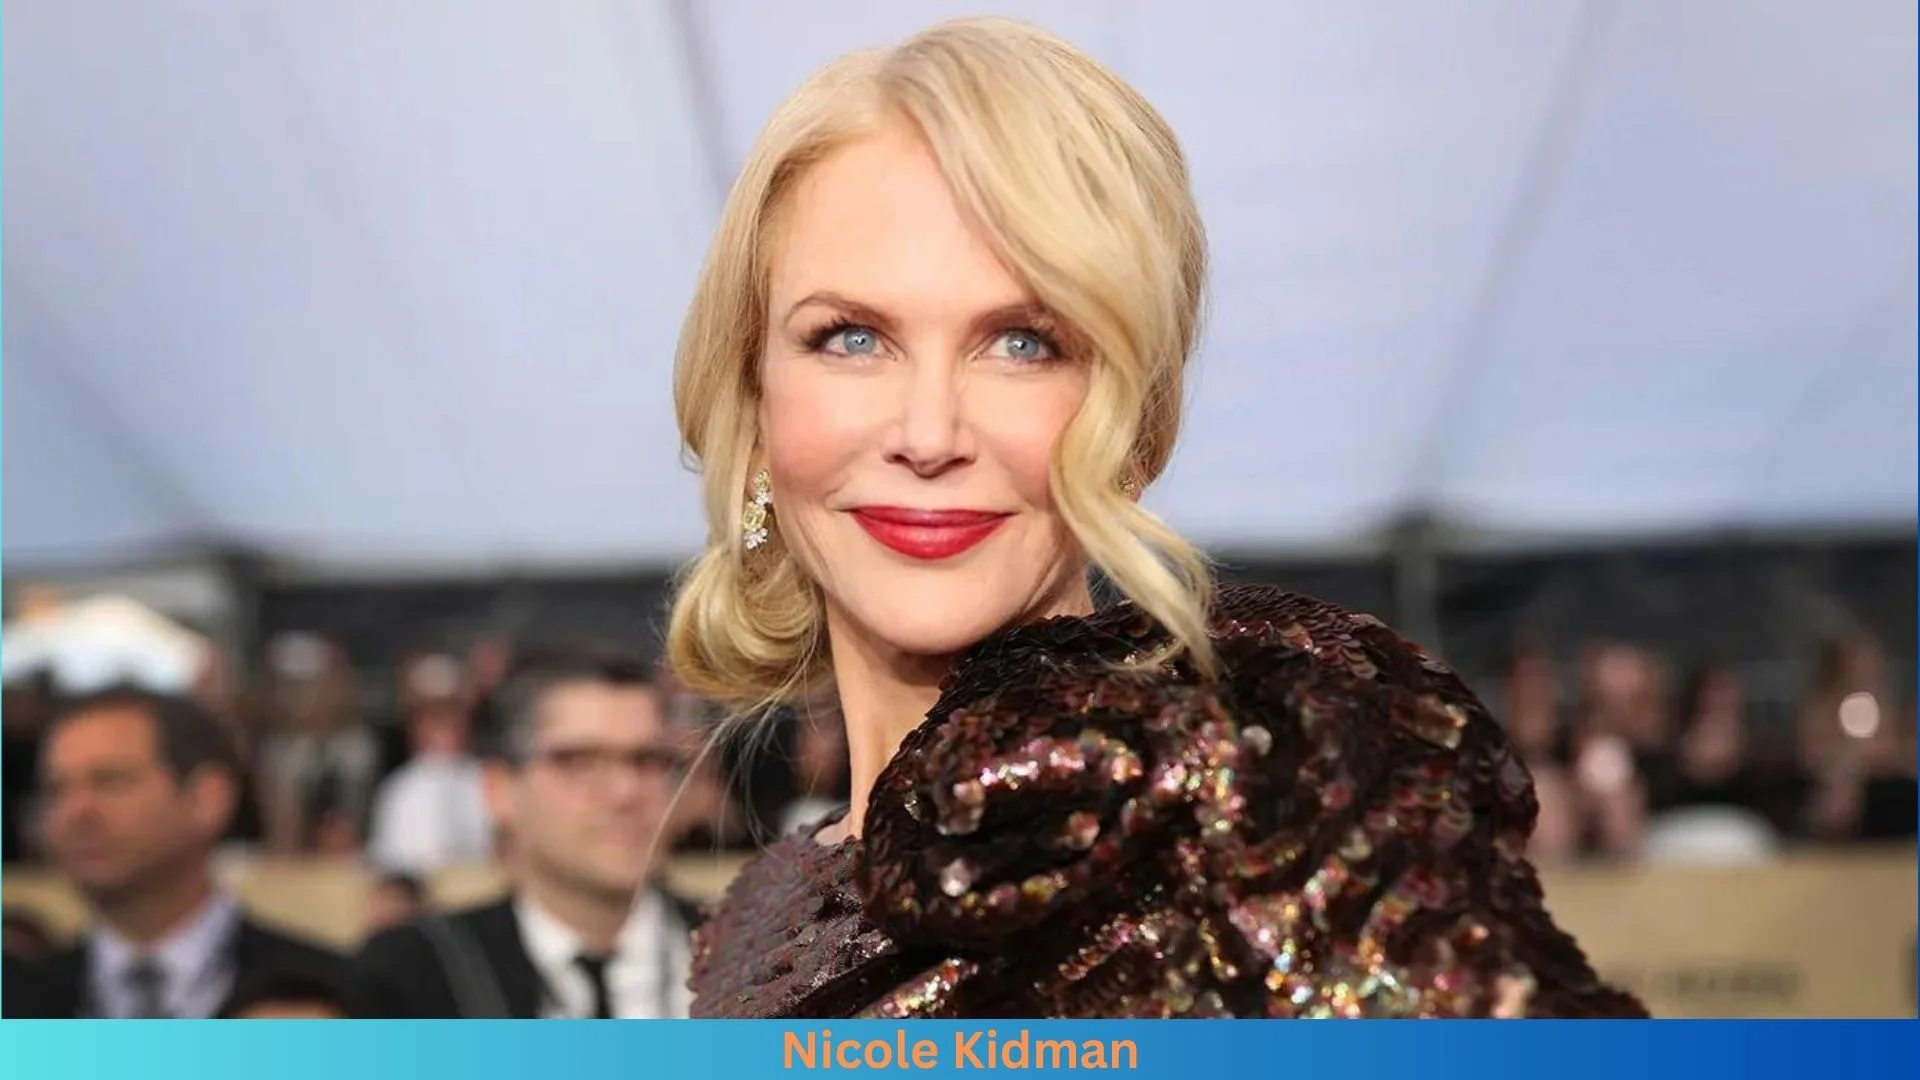 Net Worth of Nicole Kidman